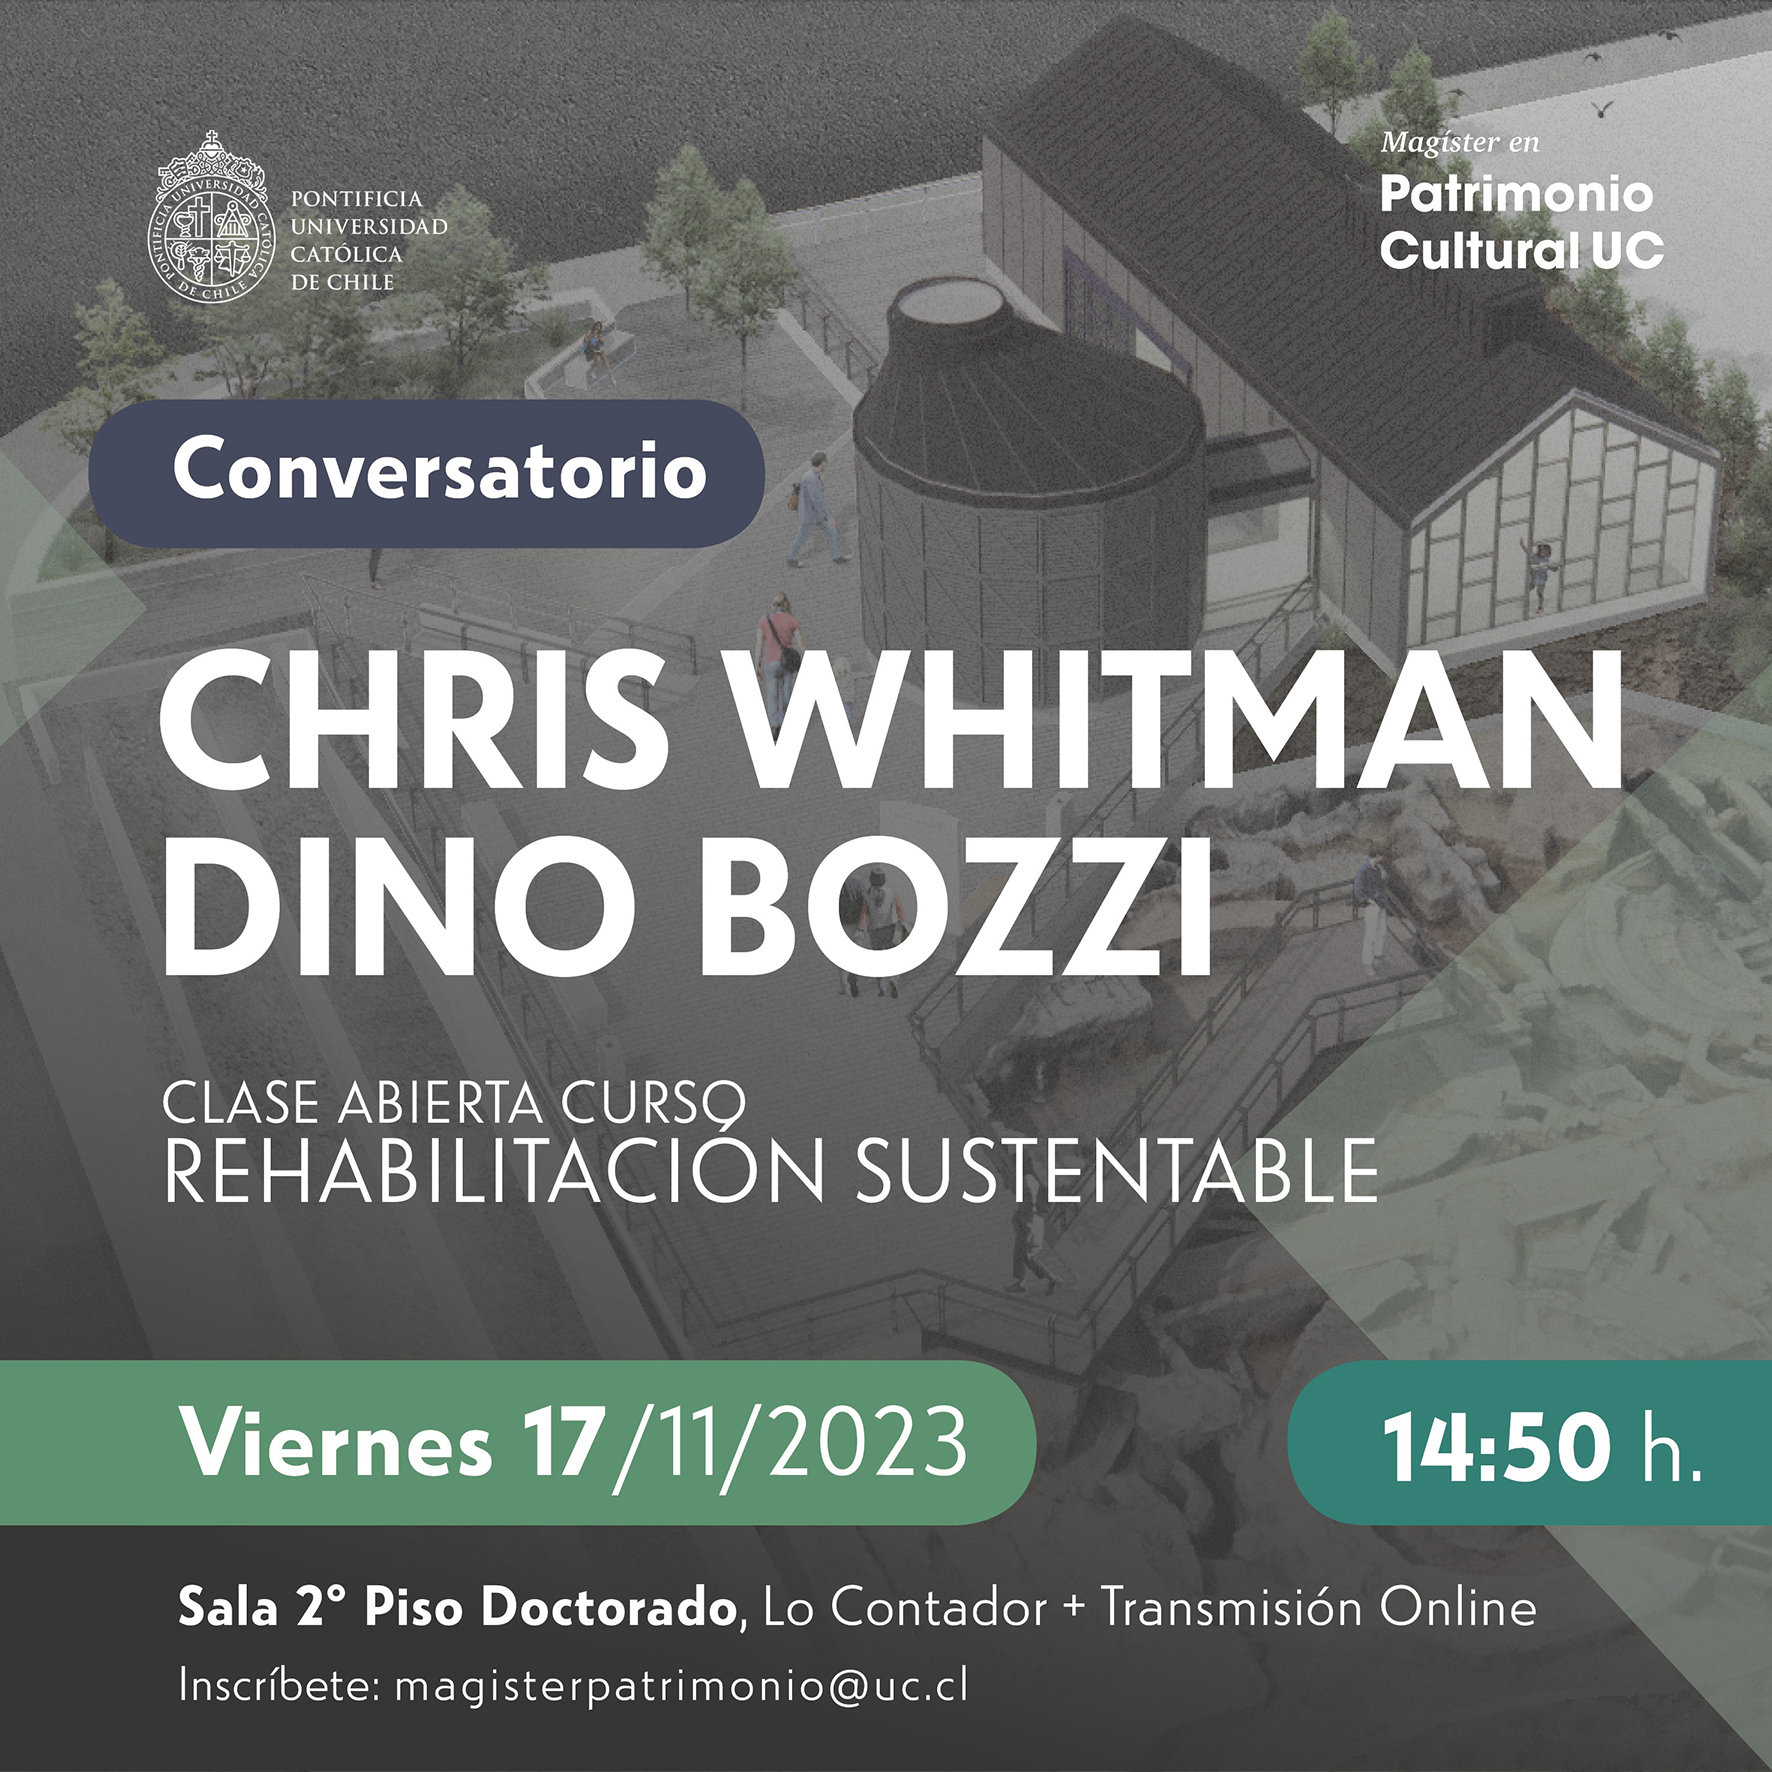 Afiche Conversatorio Chris Whitman y Dino Bozzi 